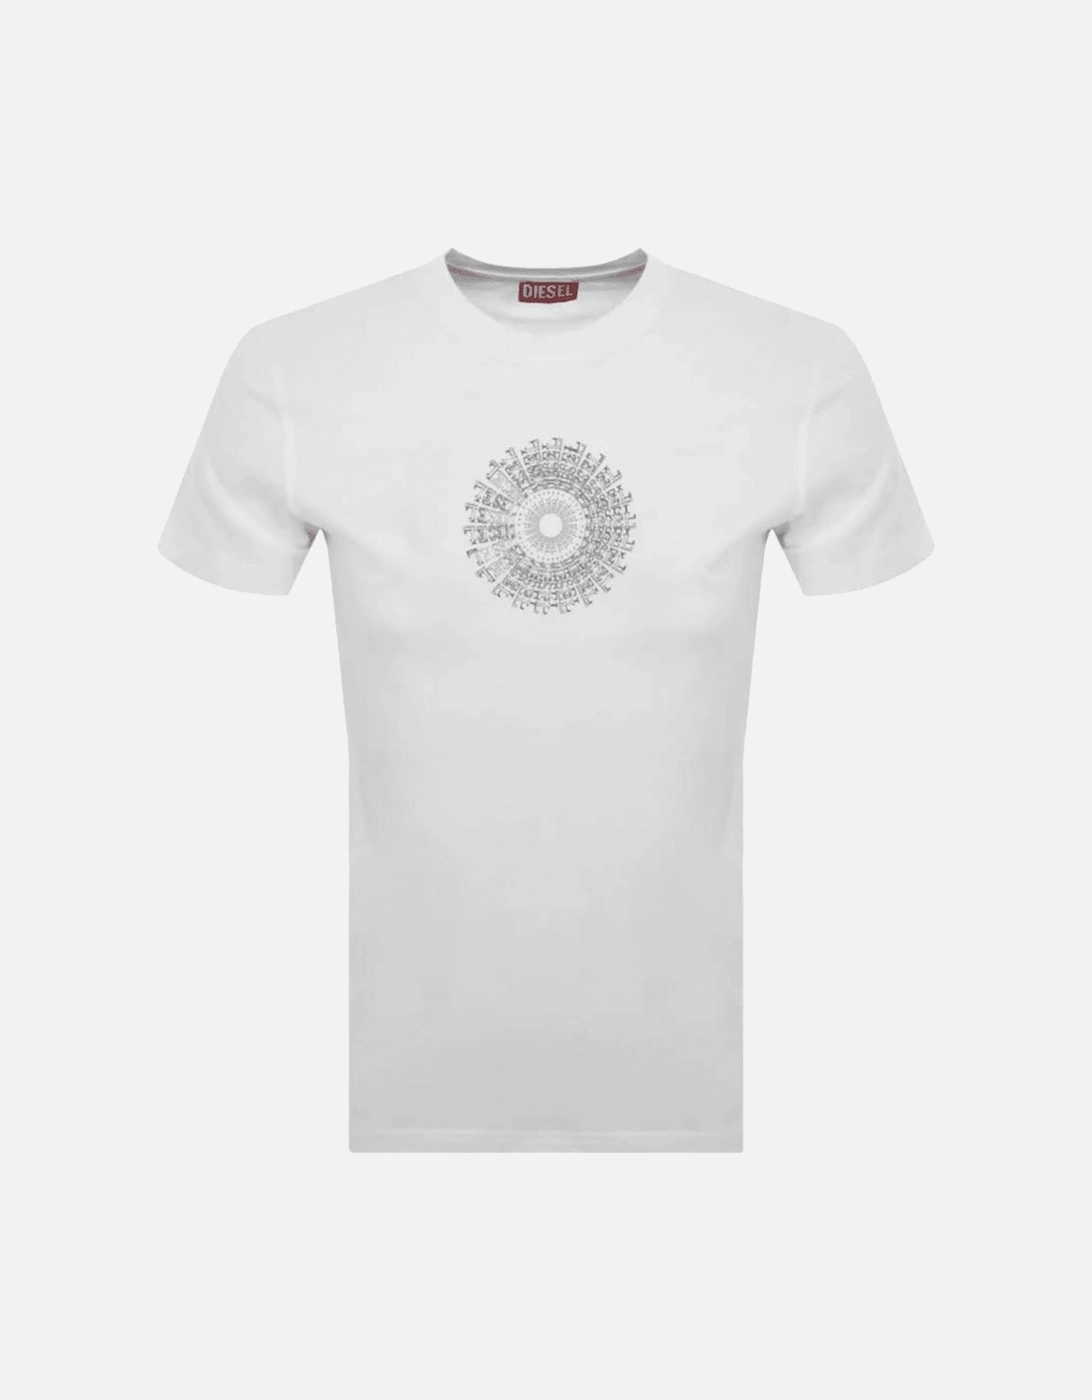 T-DIEGOR-K71 Graphic Ring Logo White T-Shirt, 3 of 2